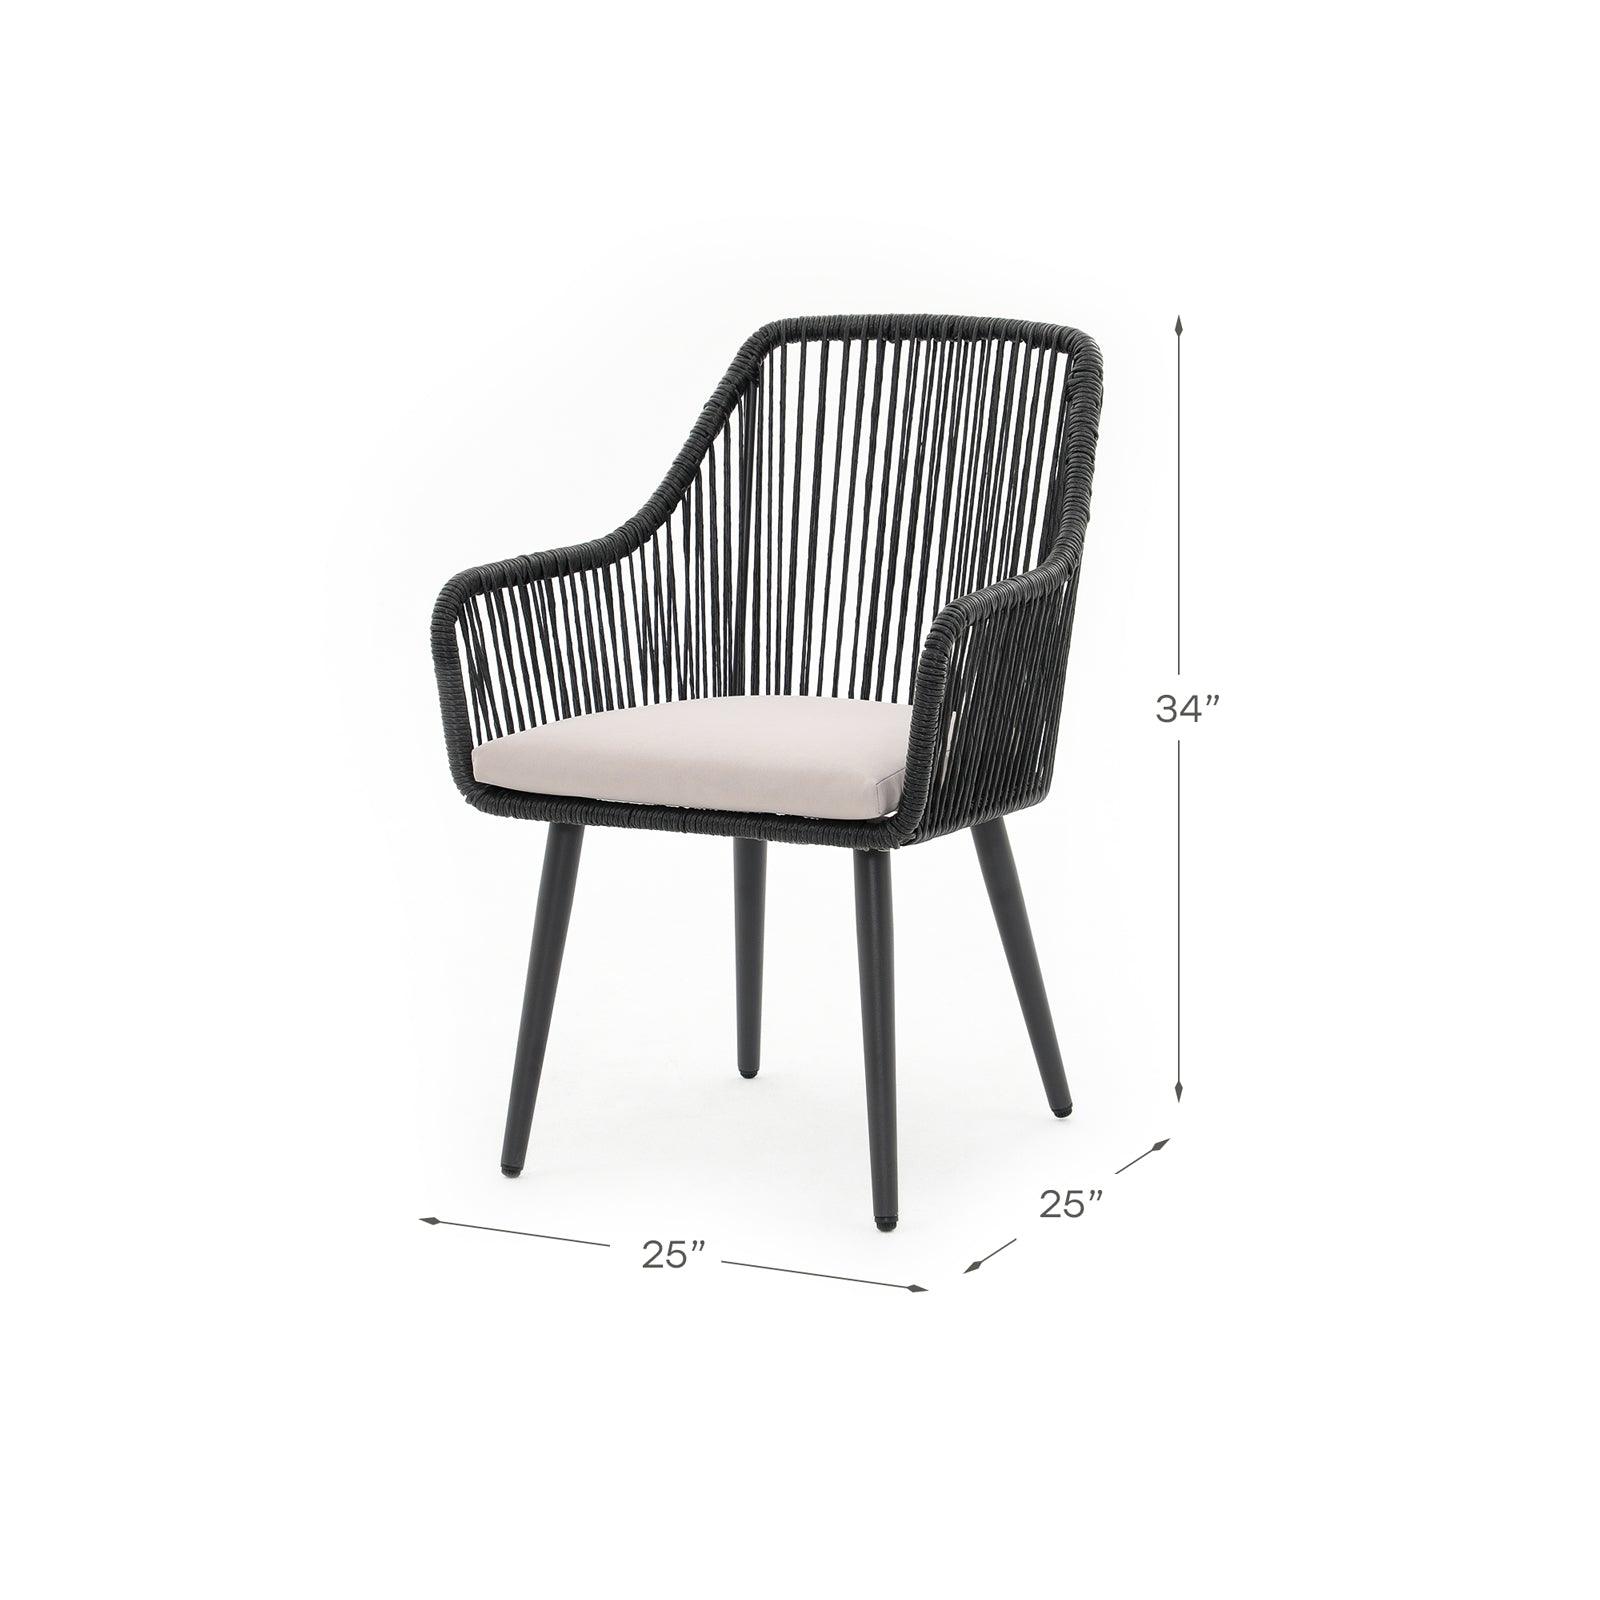 Hallerbos Black Wicker Patio Dining Chair dimension info - Jardina Furniture#Color_Black